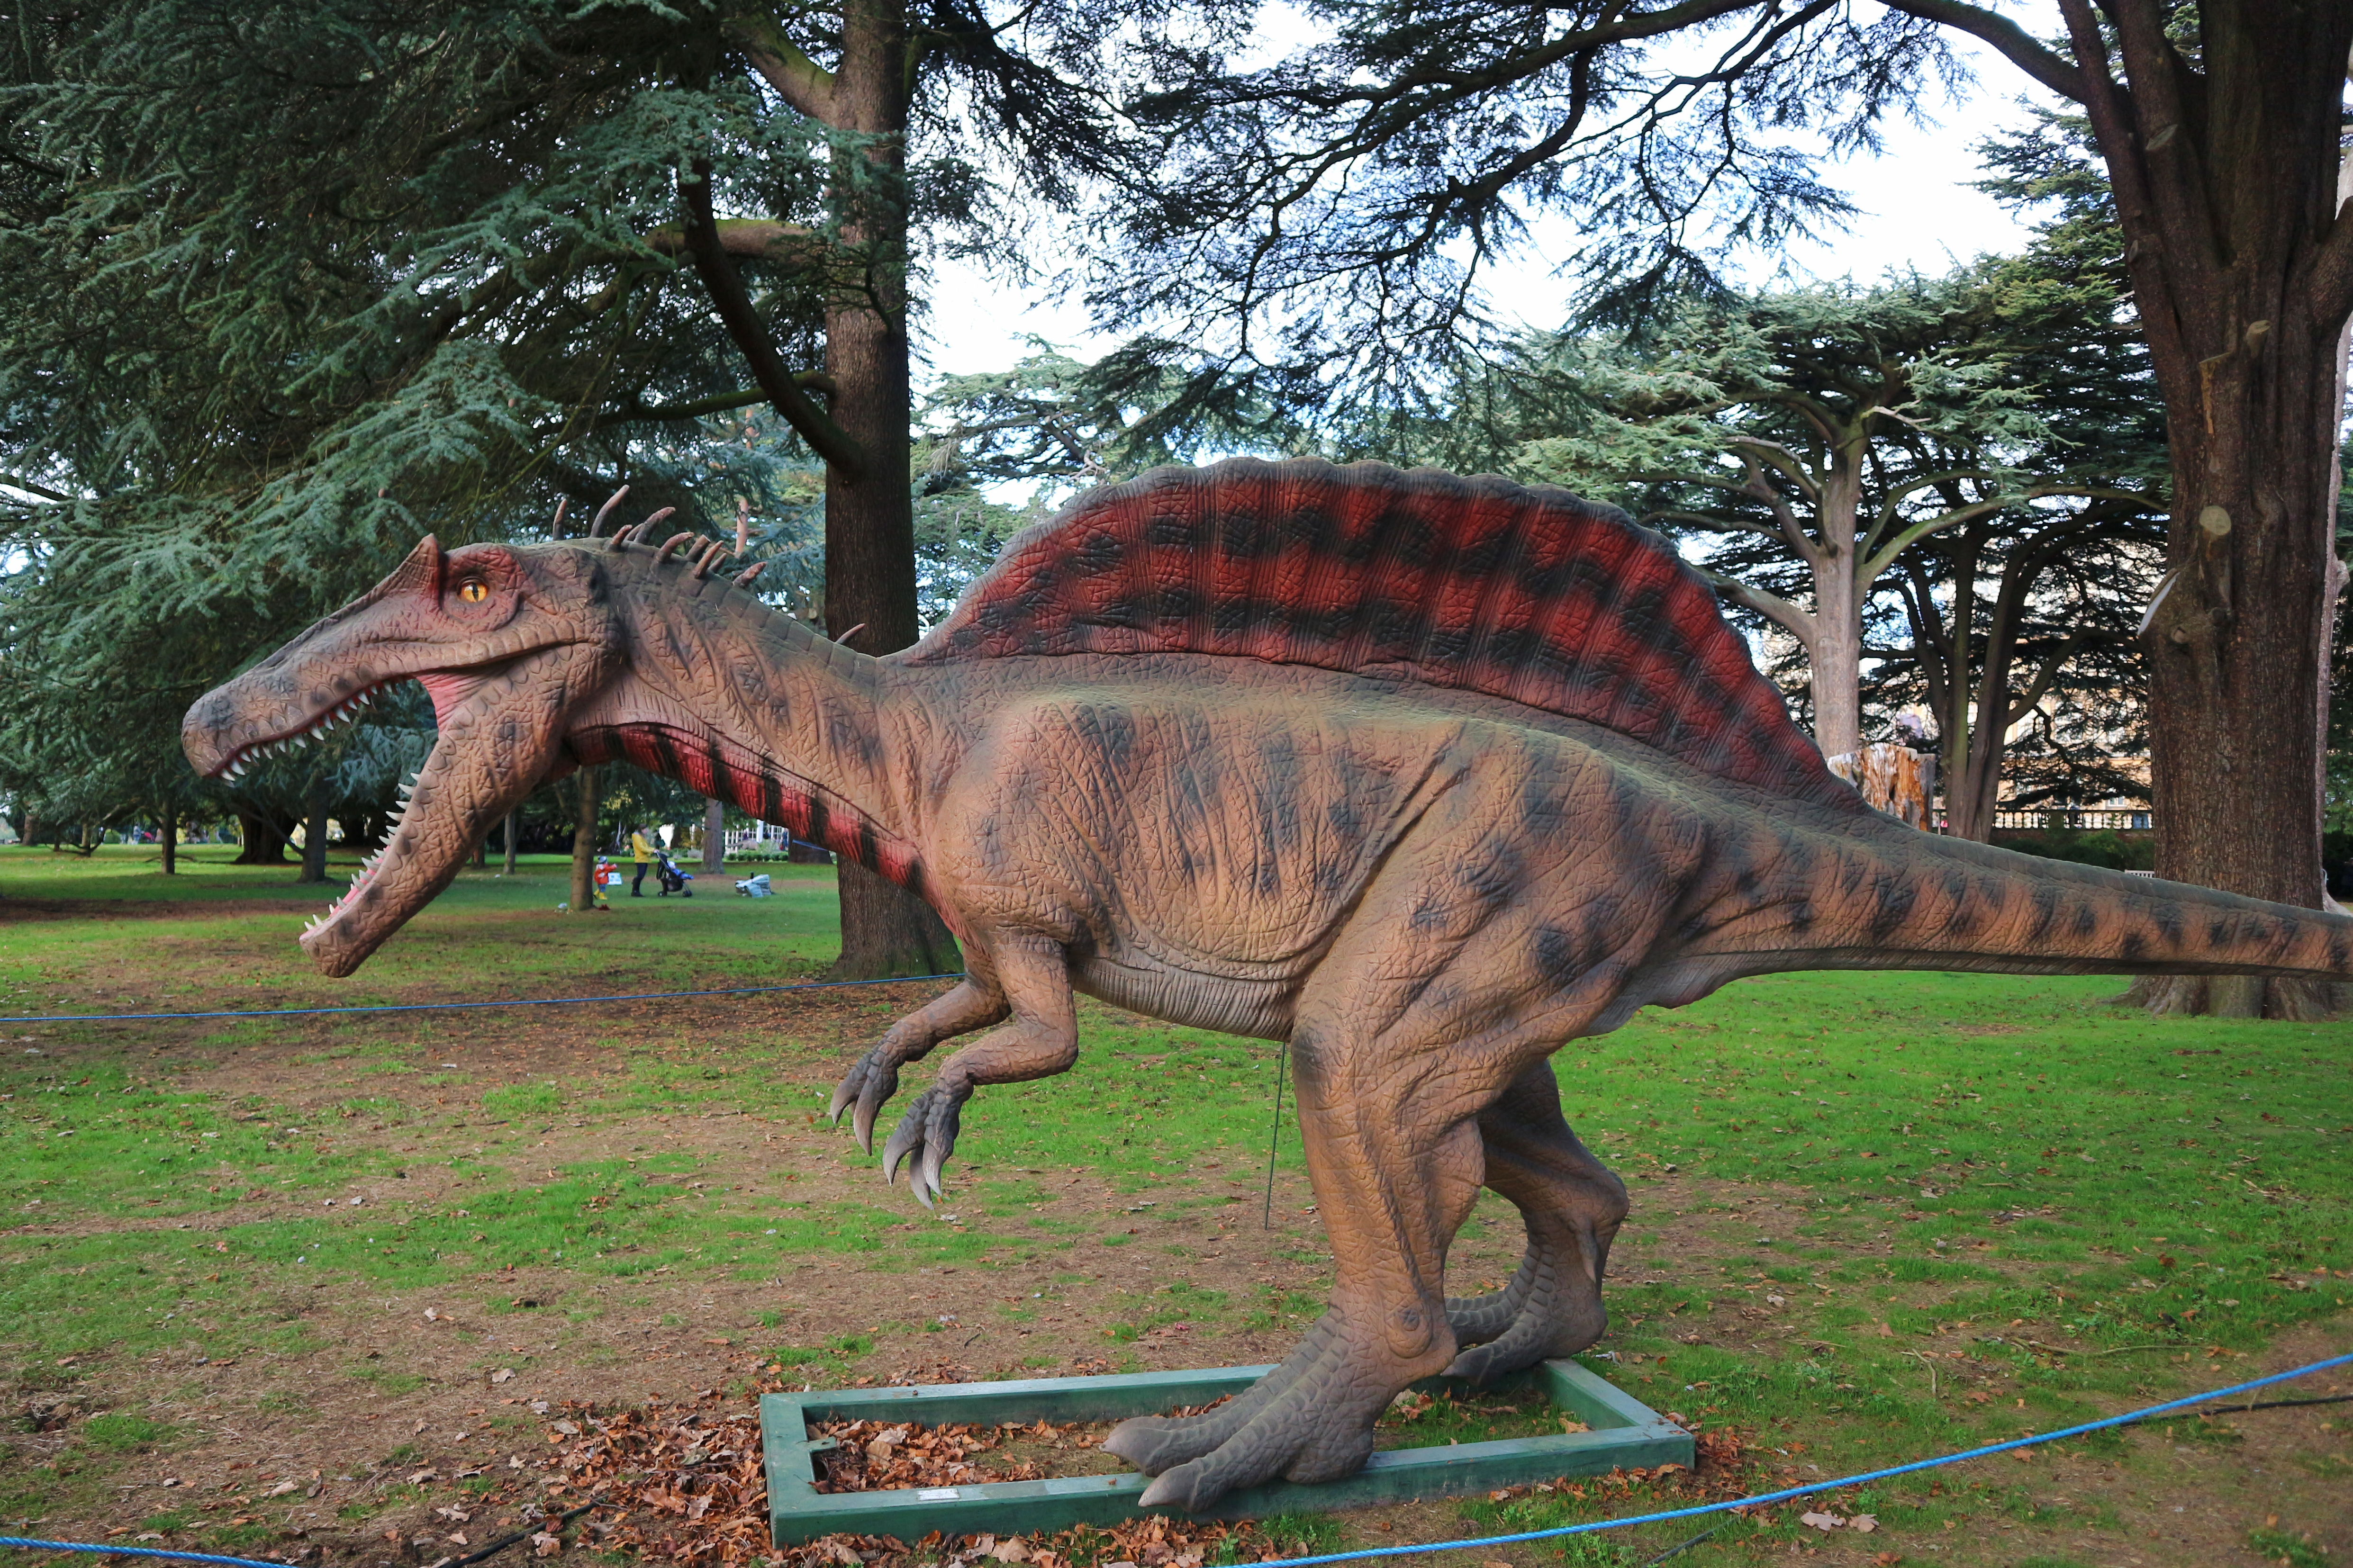 Jurassic Kingdom at Wollaton Park